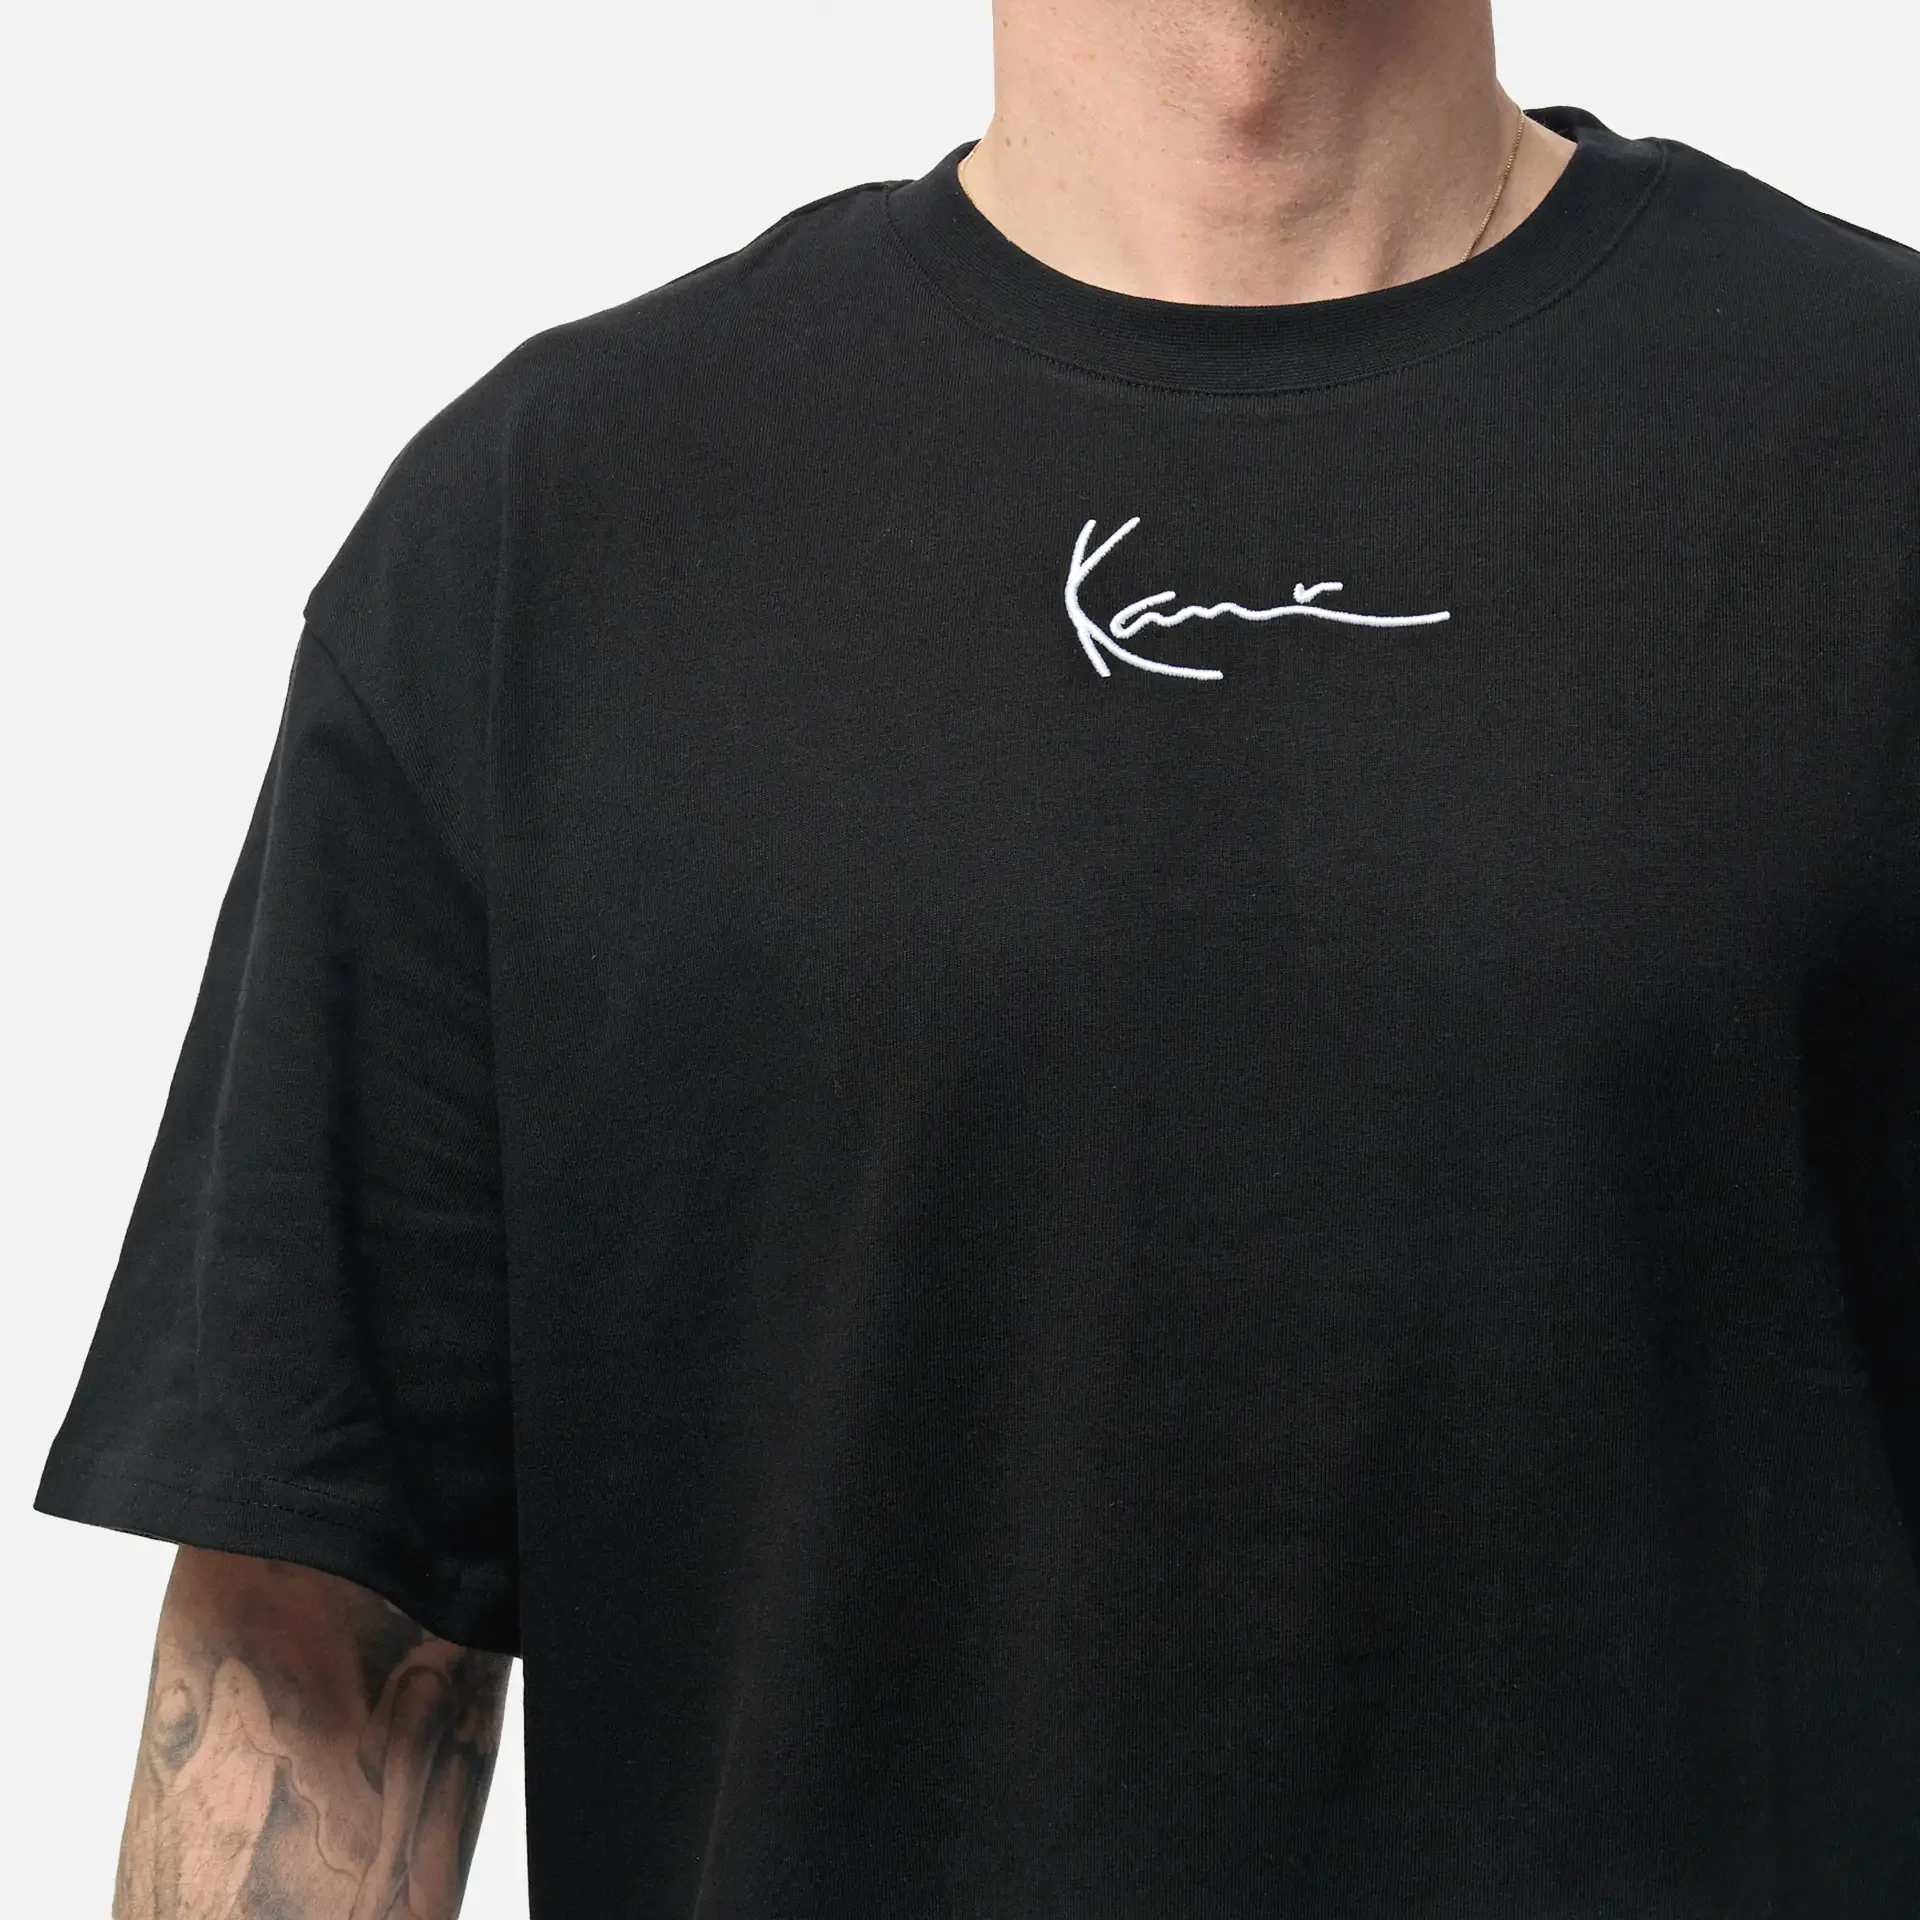 Karl Kani Small Signature T-Shirt Black/White